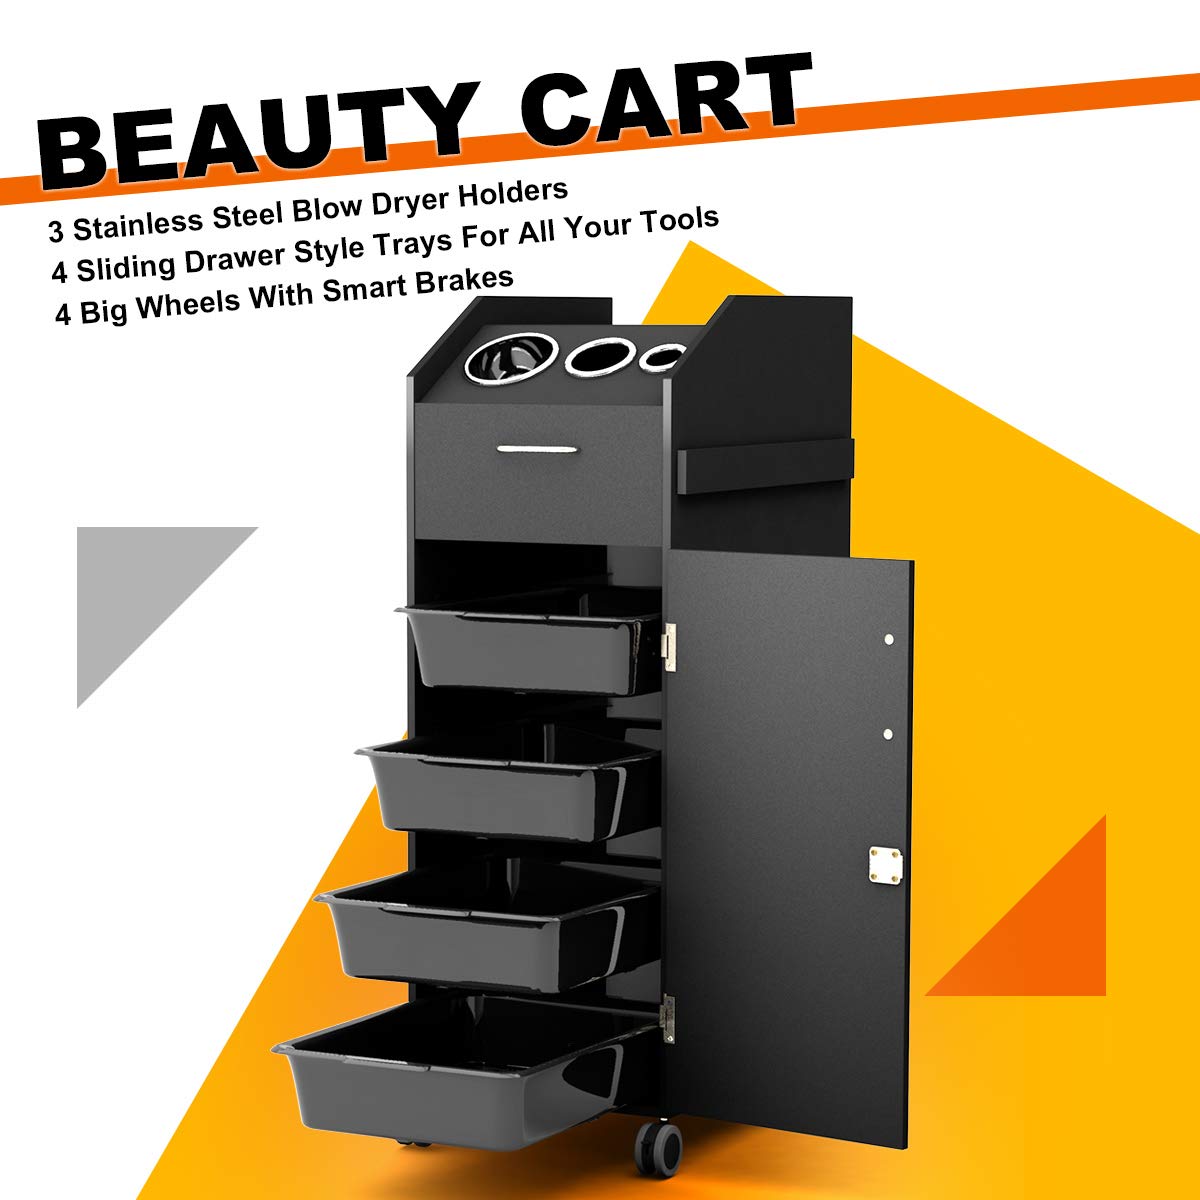 Giantex Salon SPA Beauty Rolling Trolley Cart, Storage Organizer with 4 Drawers Lockable